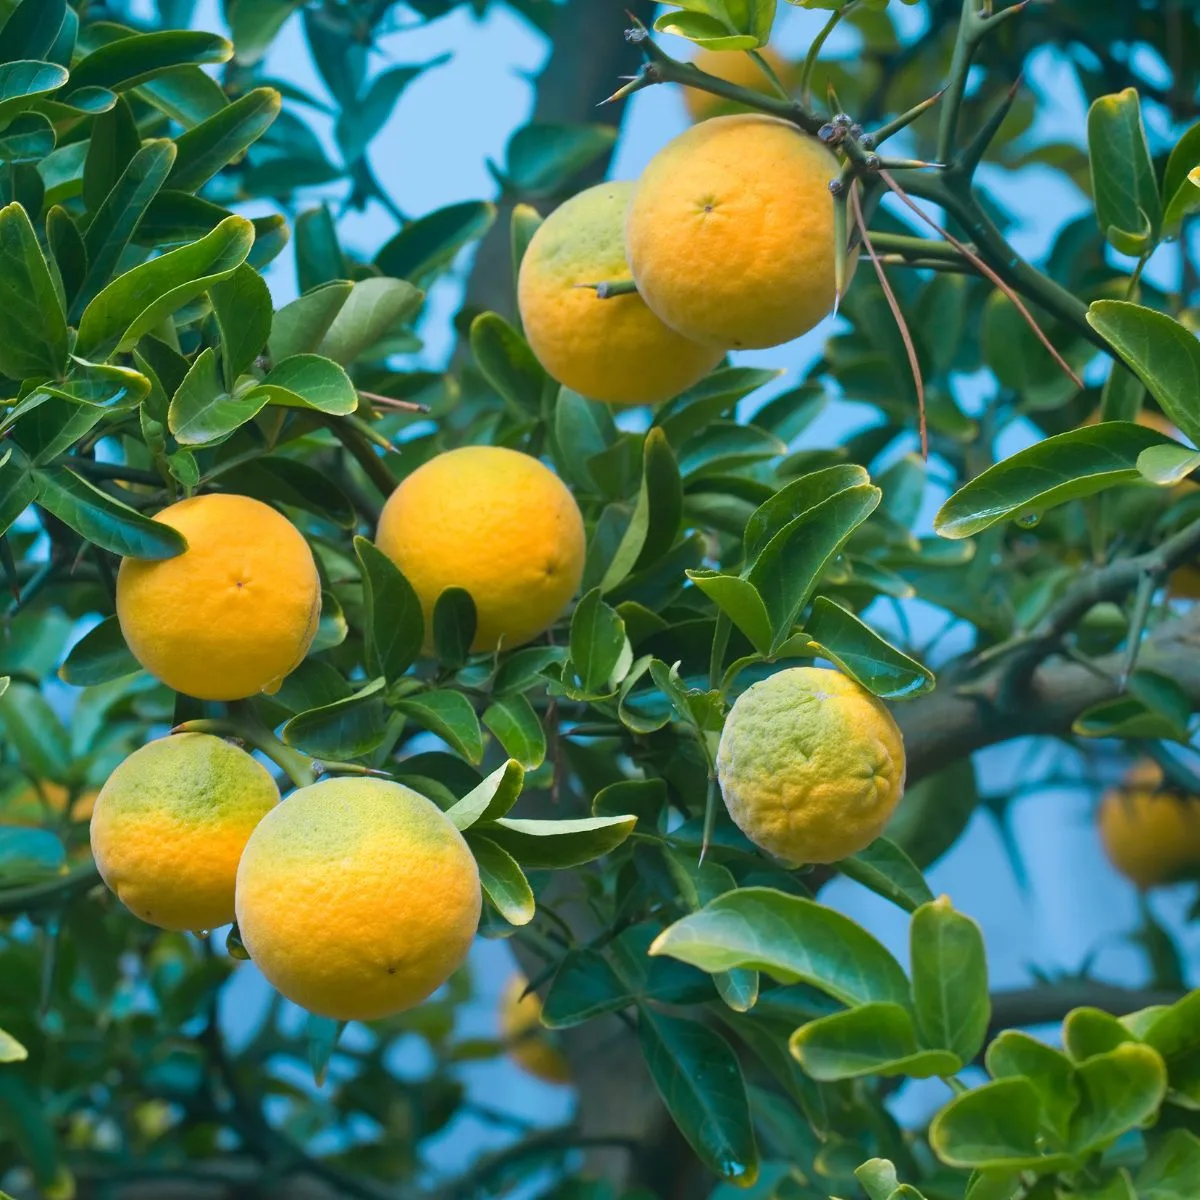 Trifoliate orange tree with fruits